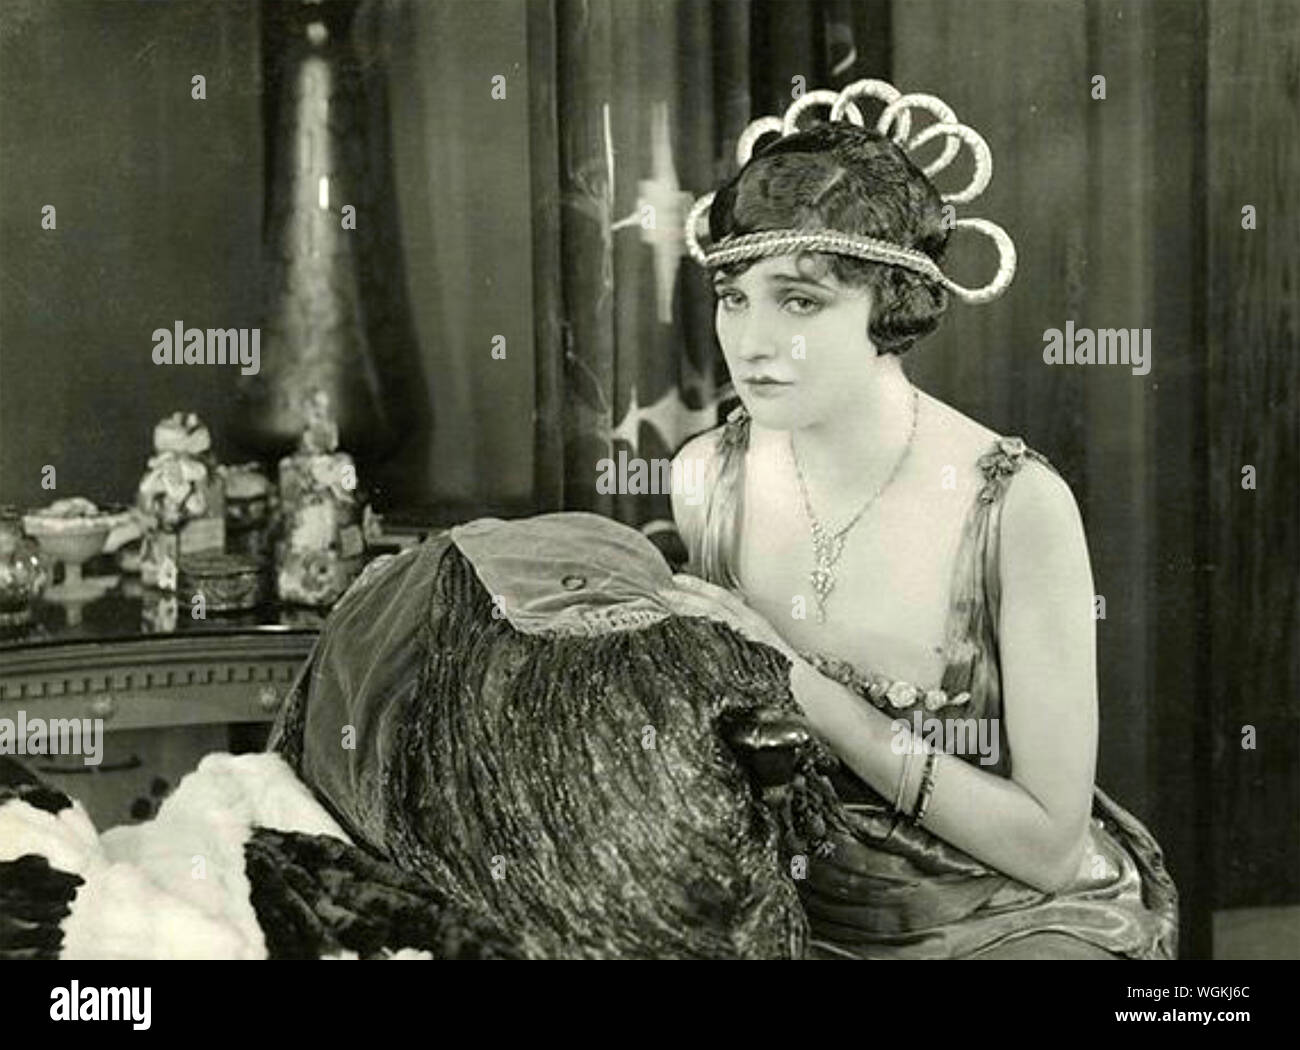 FORBIDDEN FRUIT 1921 Paramount Pictures film mudo con Agnes Ayres Foto de stock